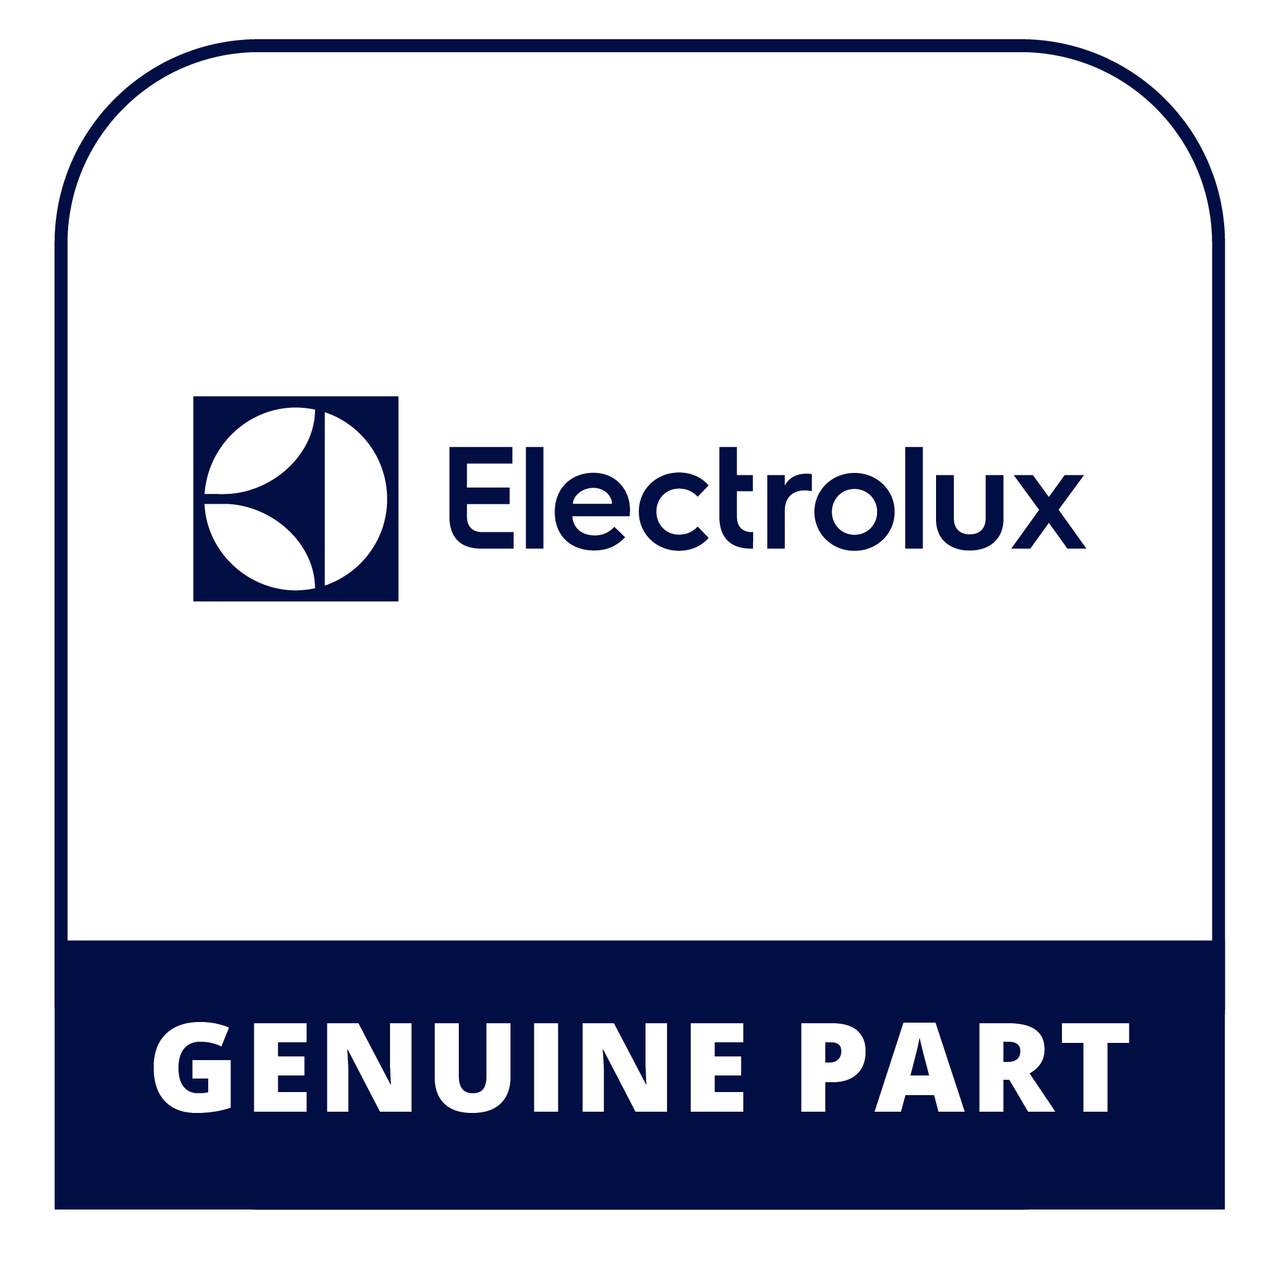 Frigidaire - Electrolux 316576430 Board - Genuine Electrolux Part